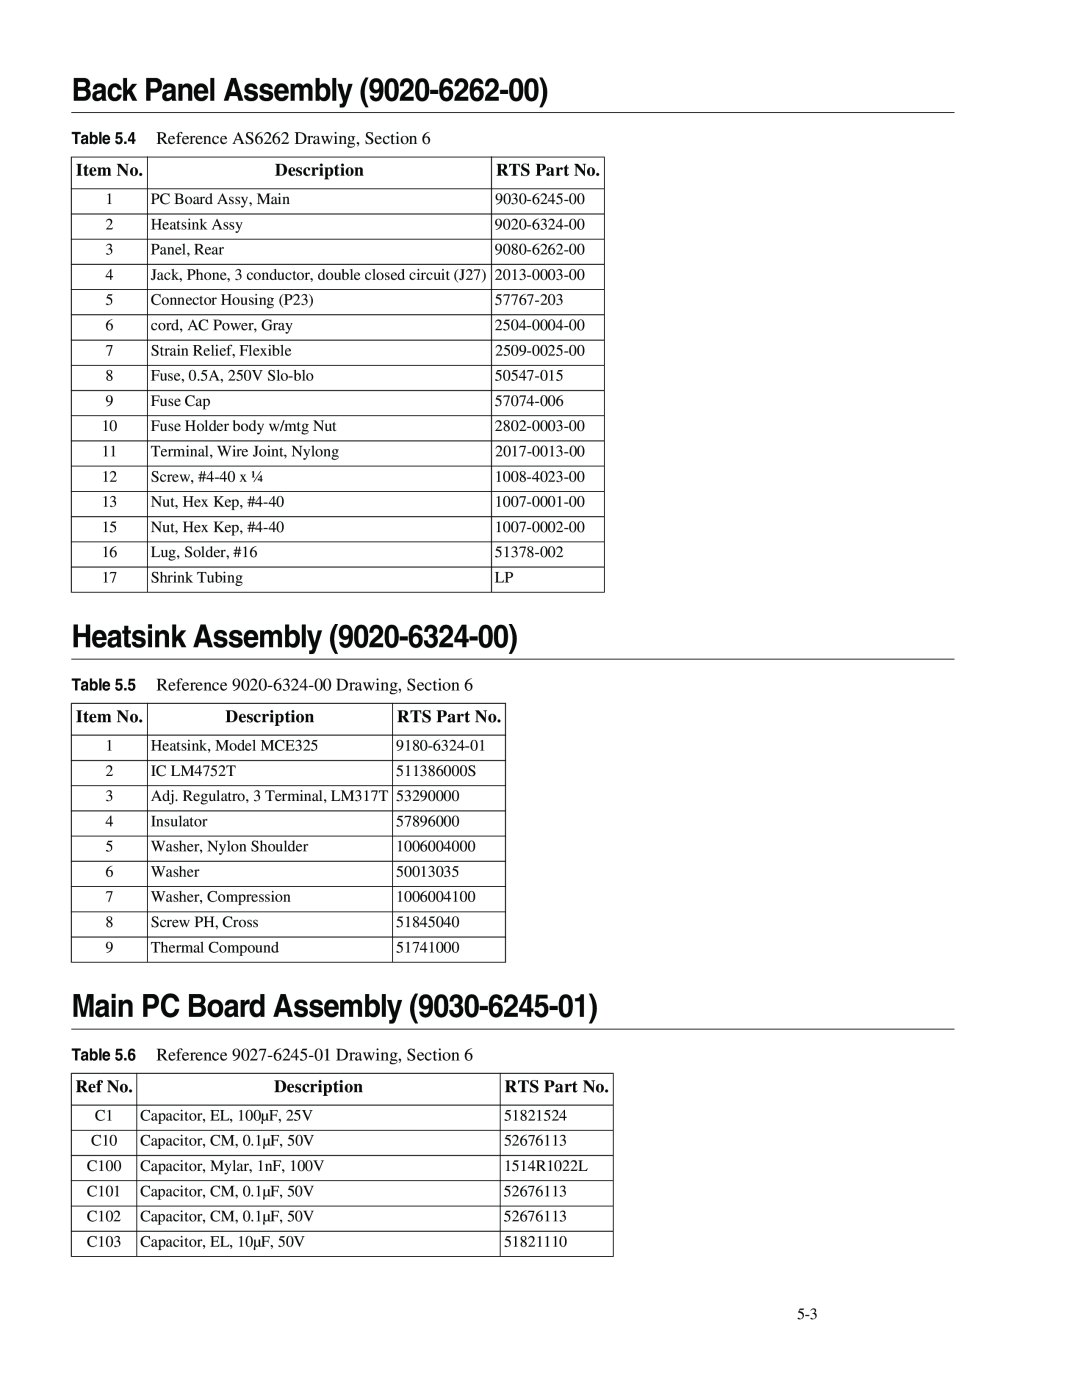 Telex MCE325 Back Panel Assembly, Heatsink Assembly, Main PC Board Assembly, Item No, Description, RTS Part No, Ref No 